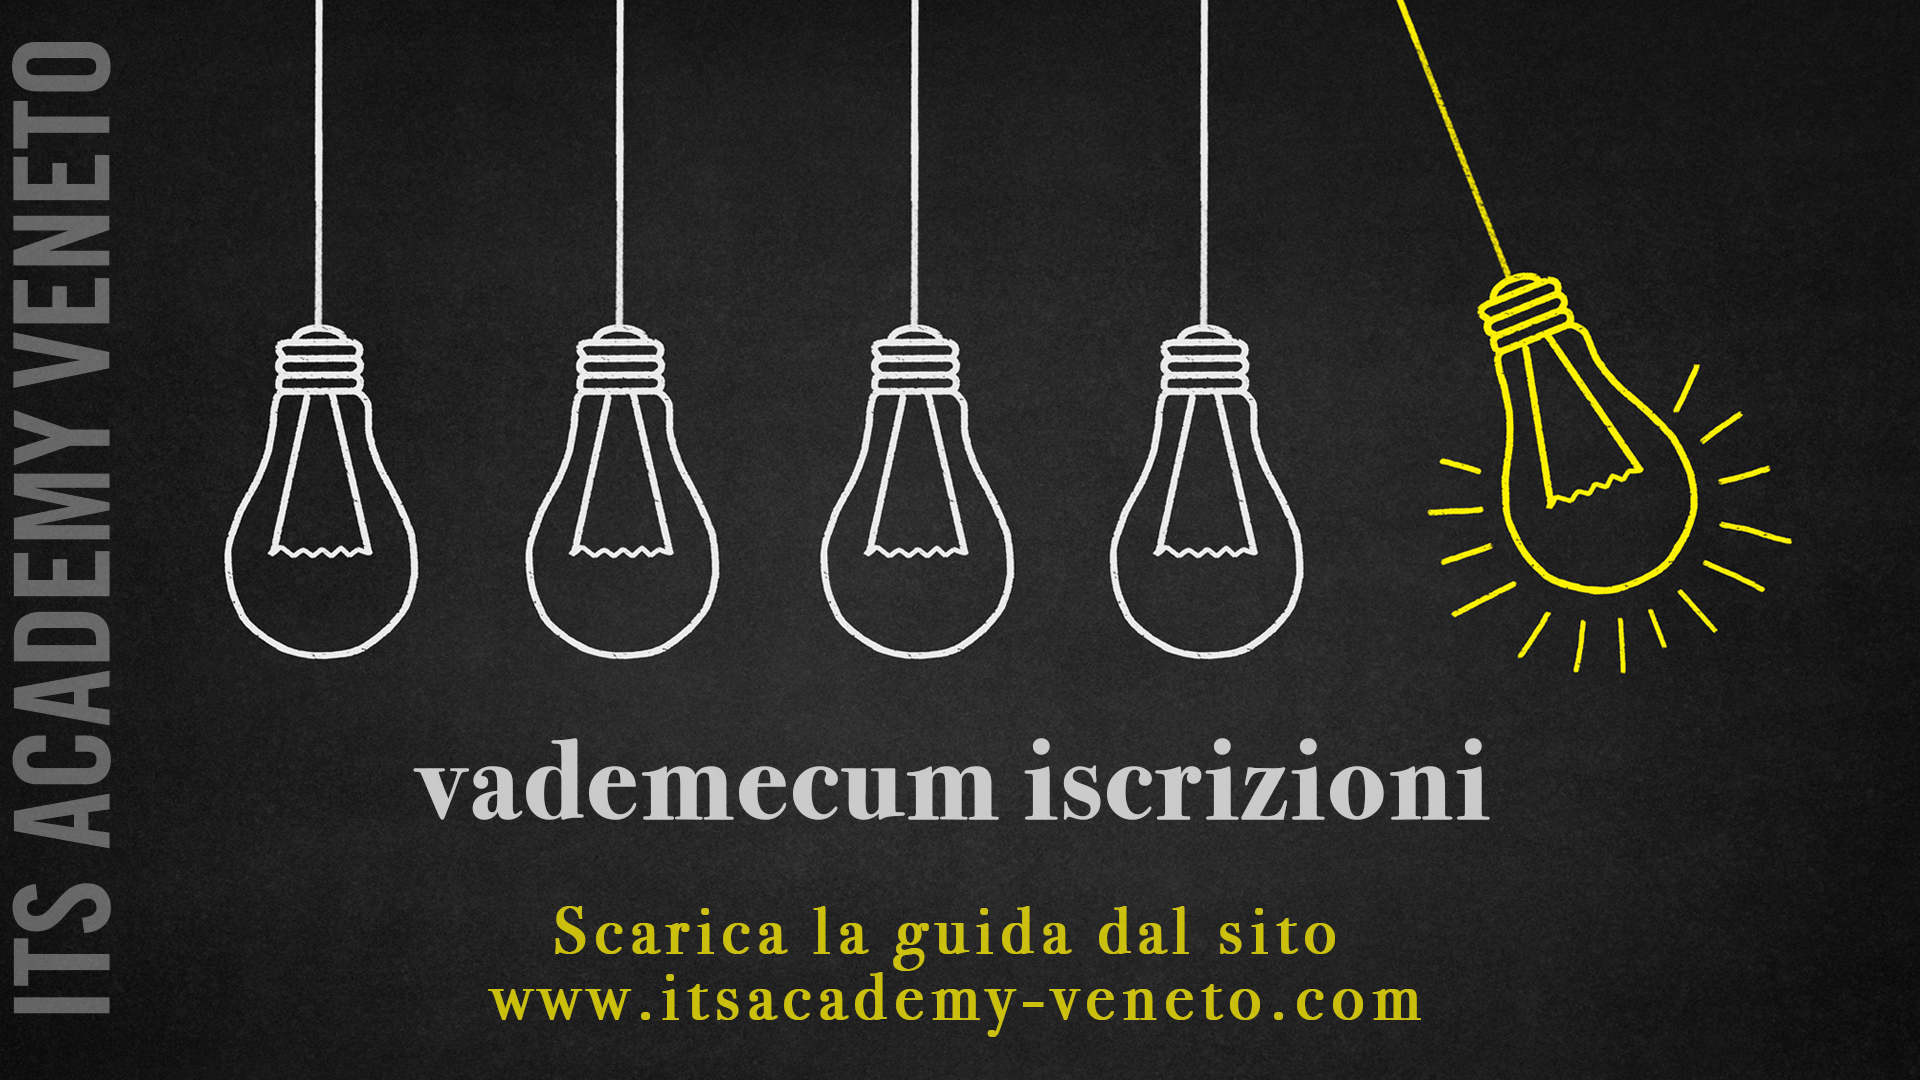 vademecum ITS Academy Veneto